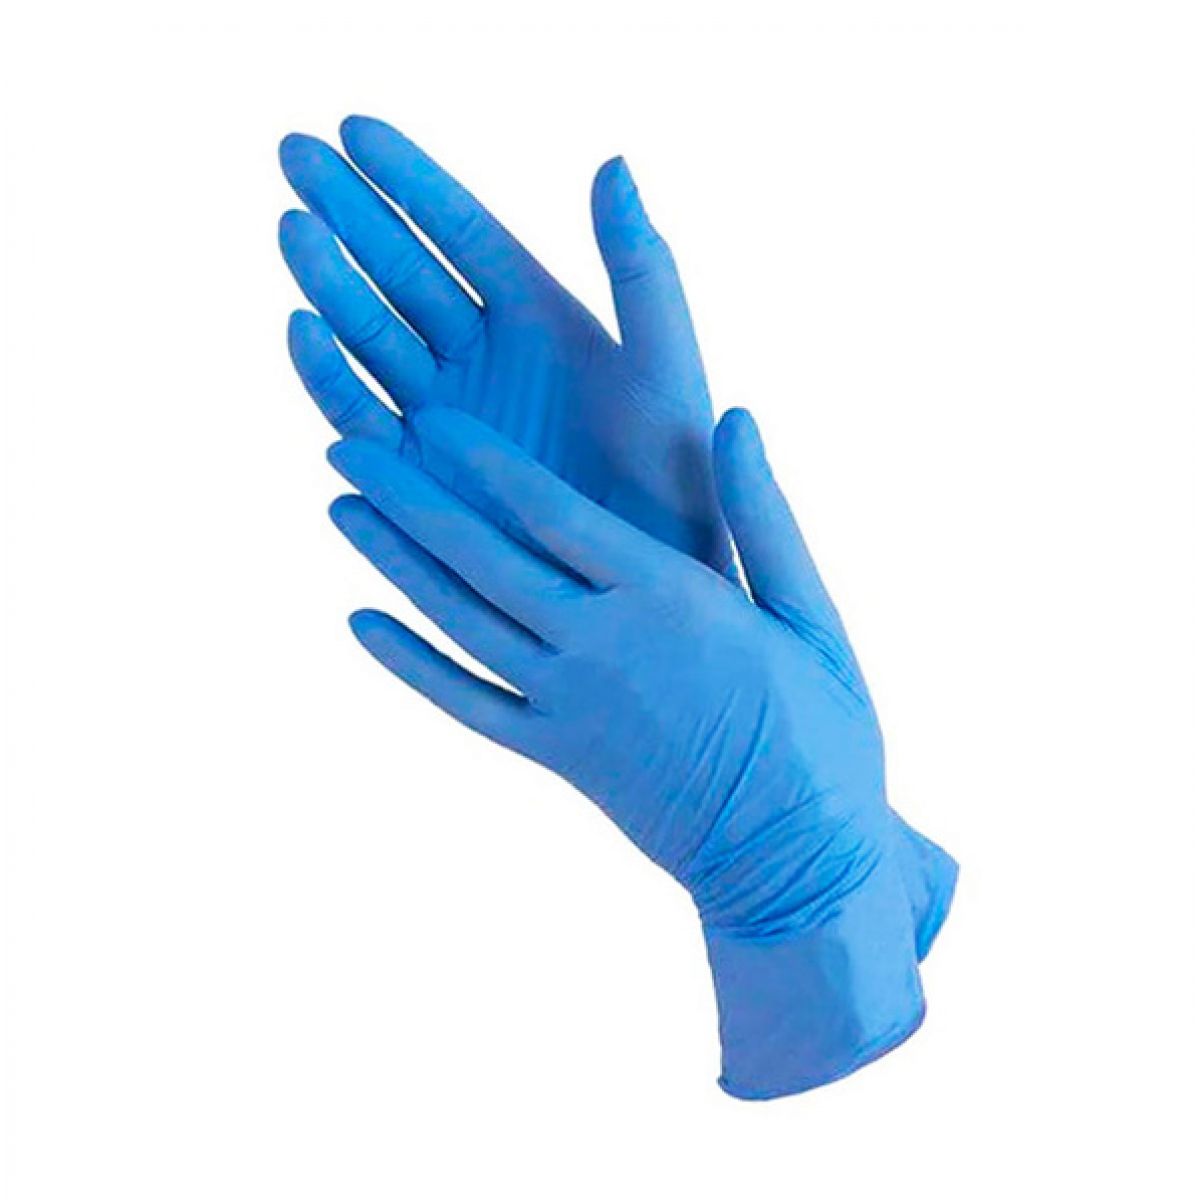 Перчатки нитриловые connect Blue Nitrile. Перчатки Wally Plastic нитриловые. Перчатки нитриловые household Gloves. Перчатки Wally Plastic (нитрил-винил).